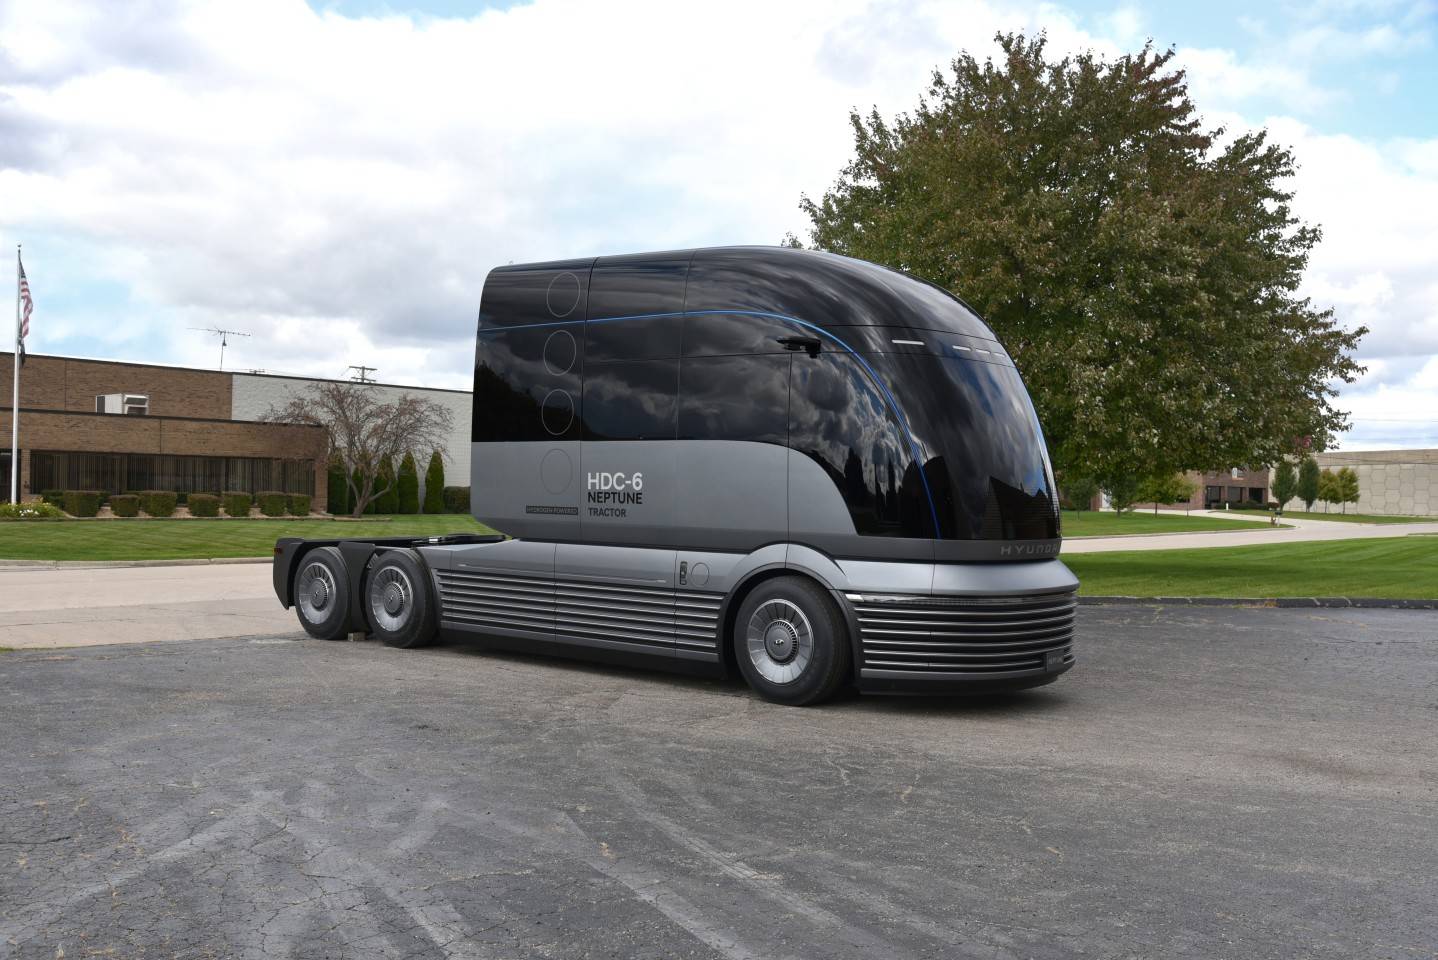 Hyundai envision eco-friendly semi-trucks with hdc-6 neptune concept - futurecar.com - via @futurecar_media